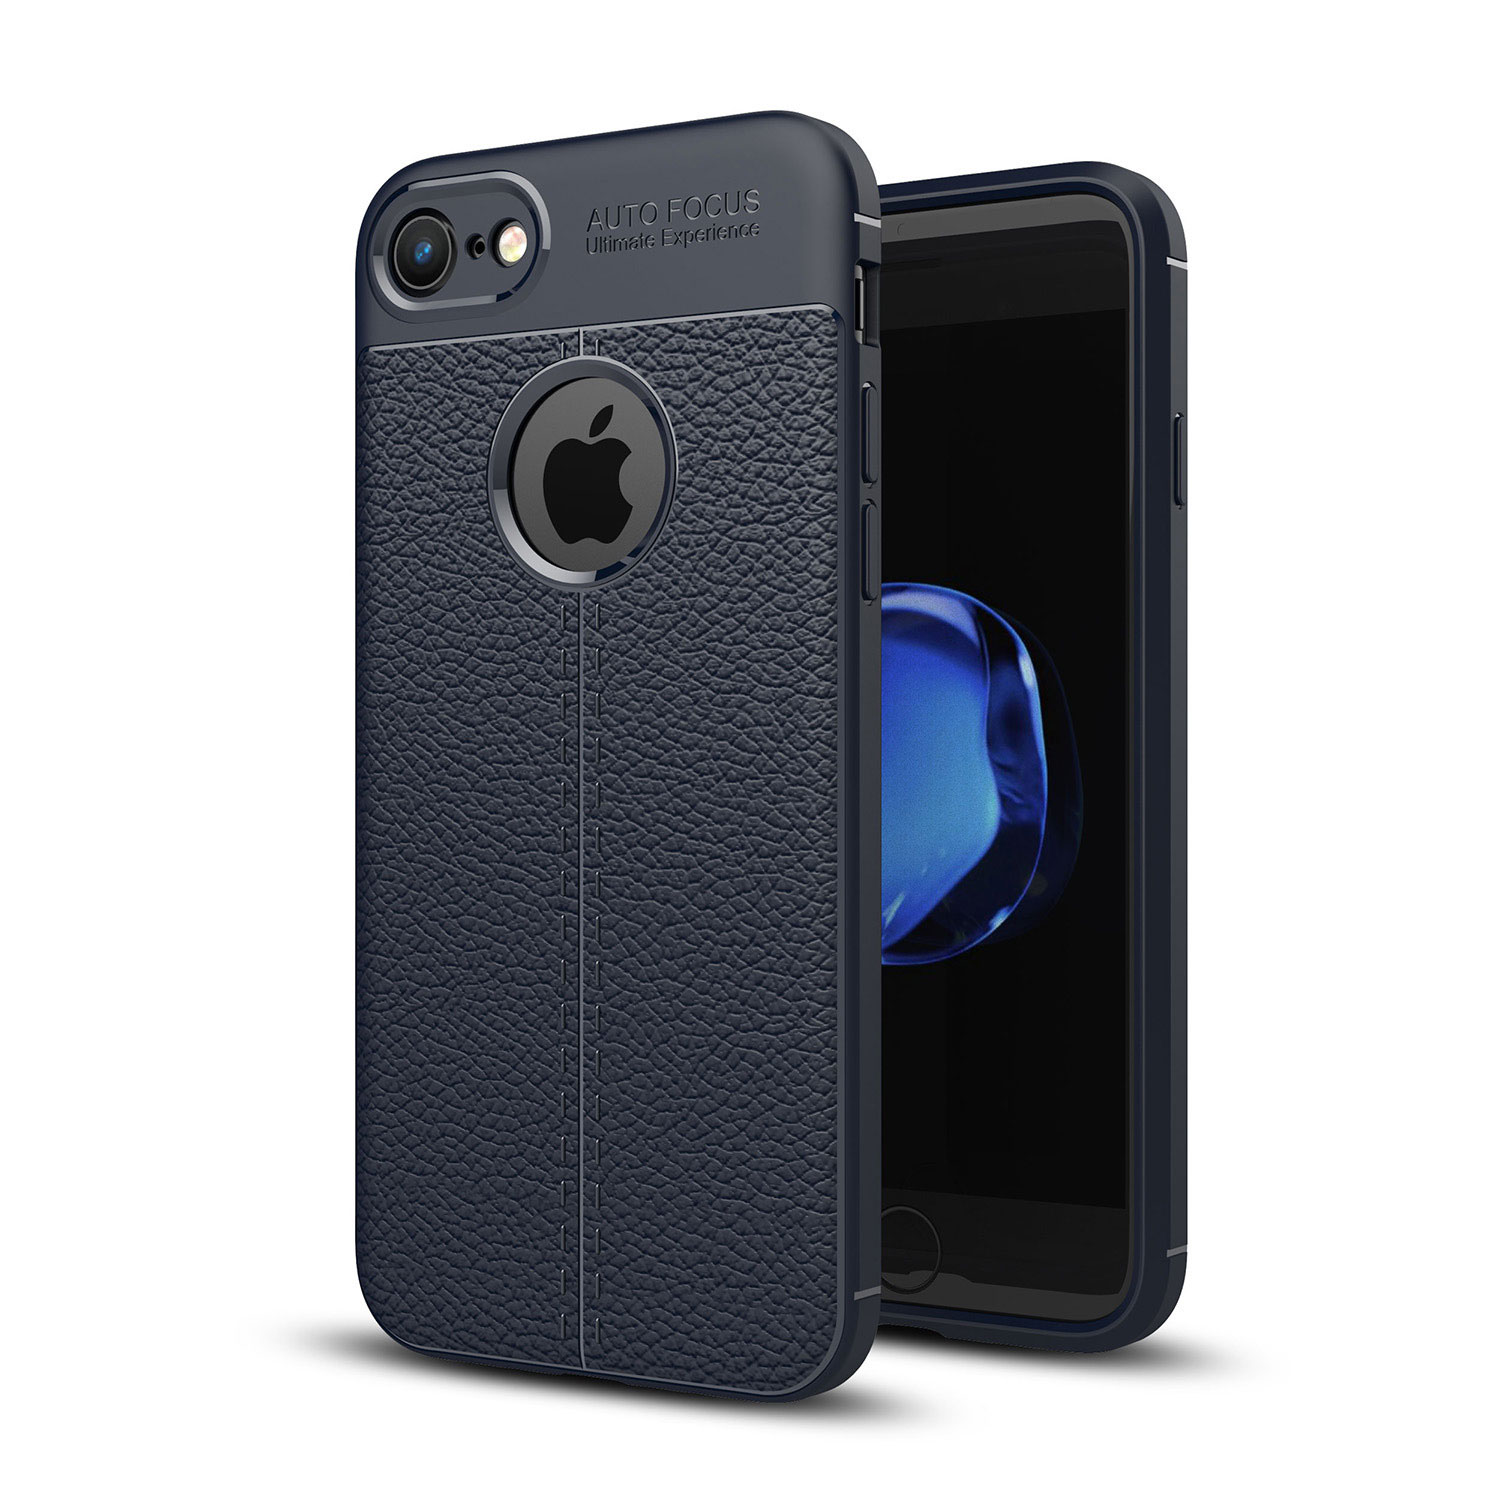 iPHONE 8 / iPHONE 7 TPU Leather Armor Hybrid Case (Blue)